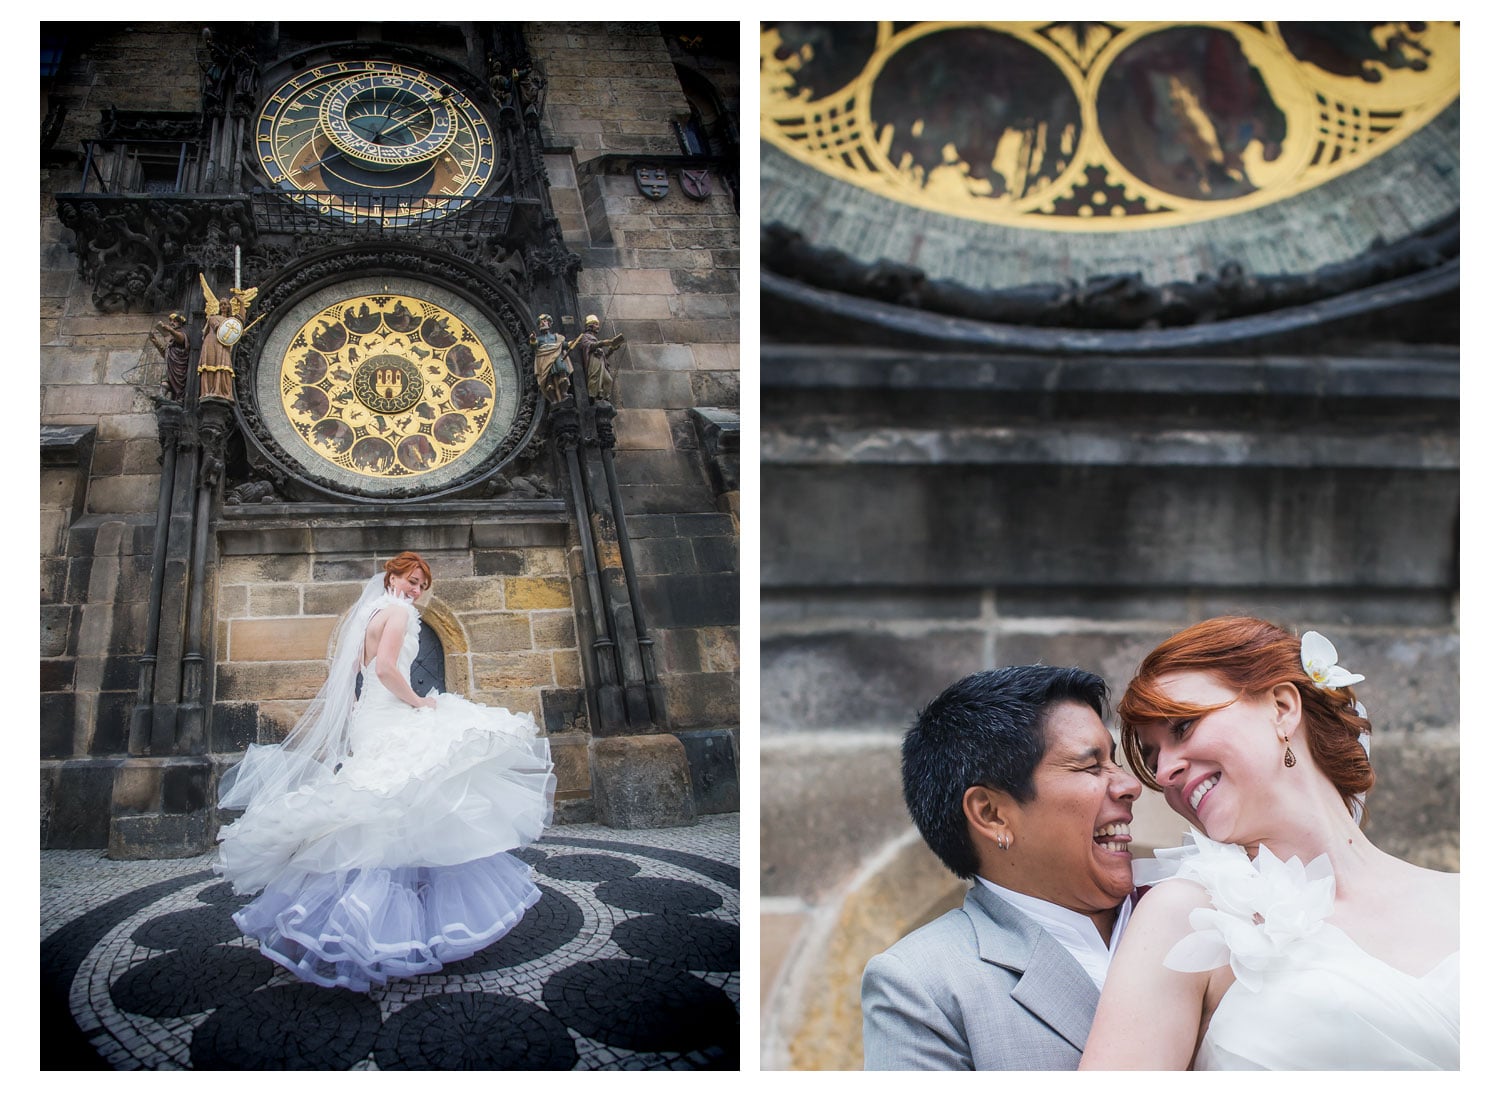 Charles Bridge Wedding / Kimberly & Jules / Astronomical Clock wedding portraits